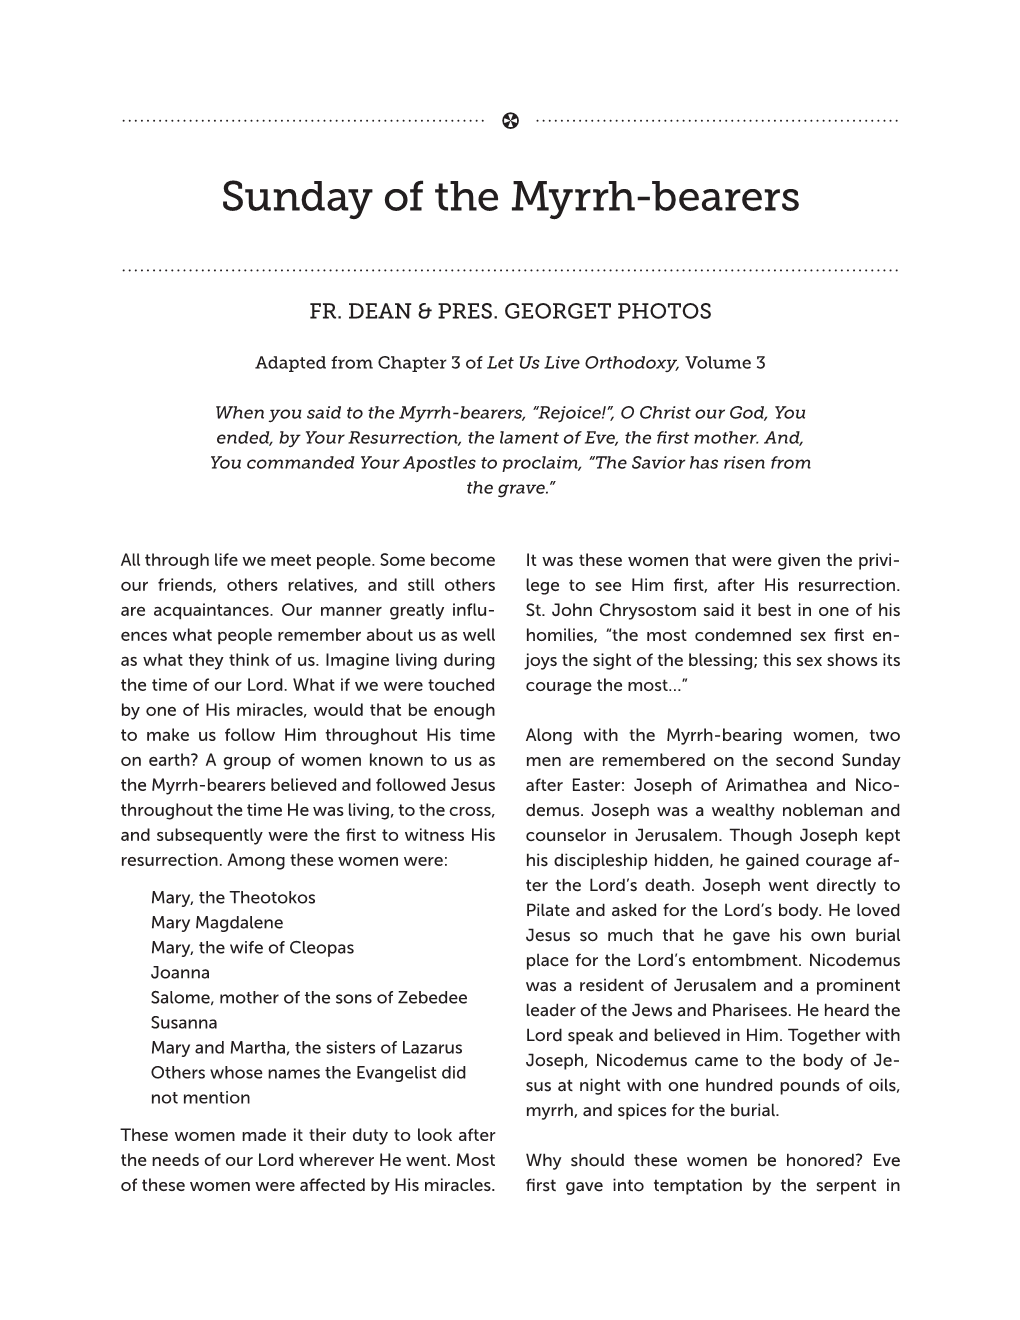 Sunday of the Myrrh-Bearers